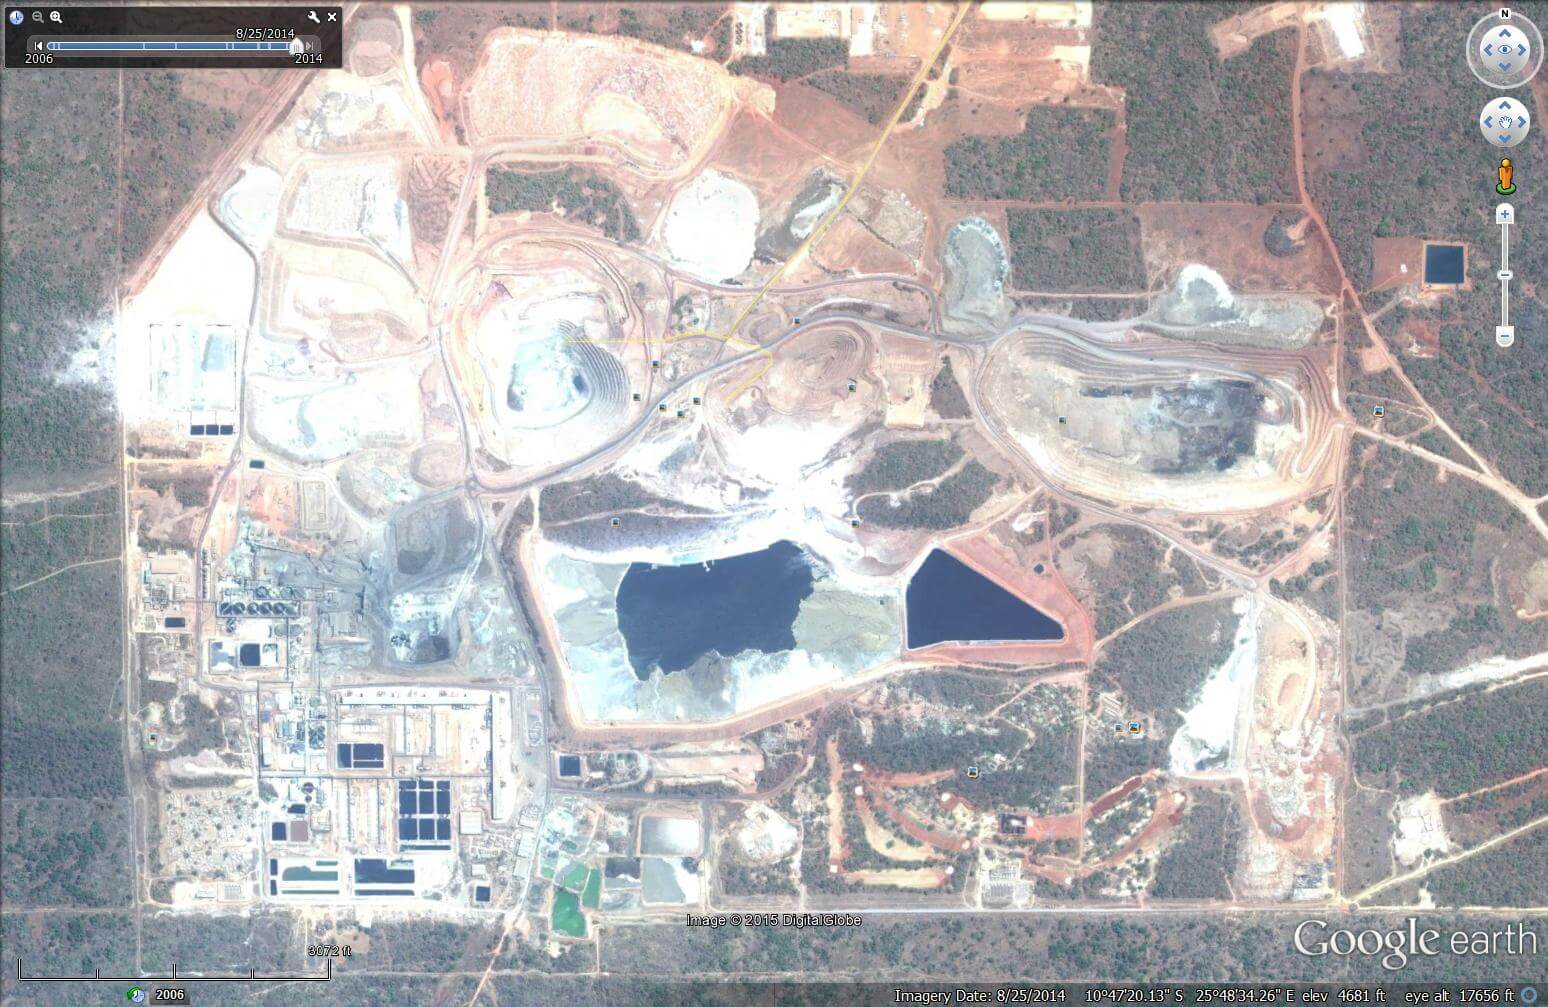 DRC: towards the production stop of Mutanda, the largest Cobalt mine!